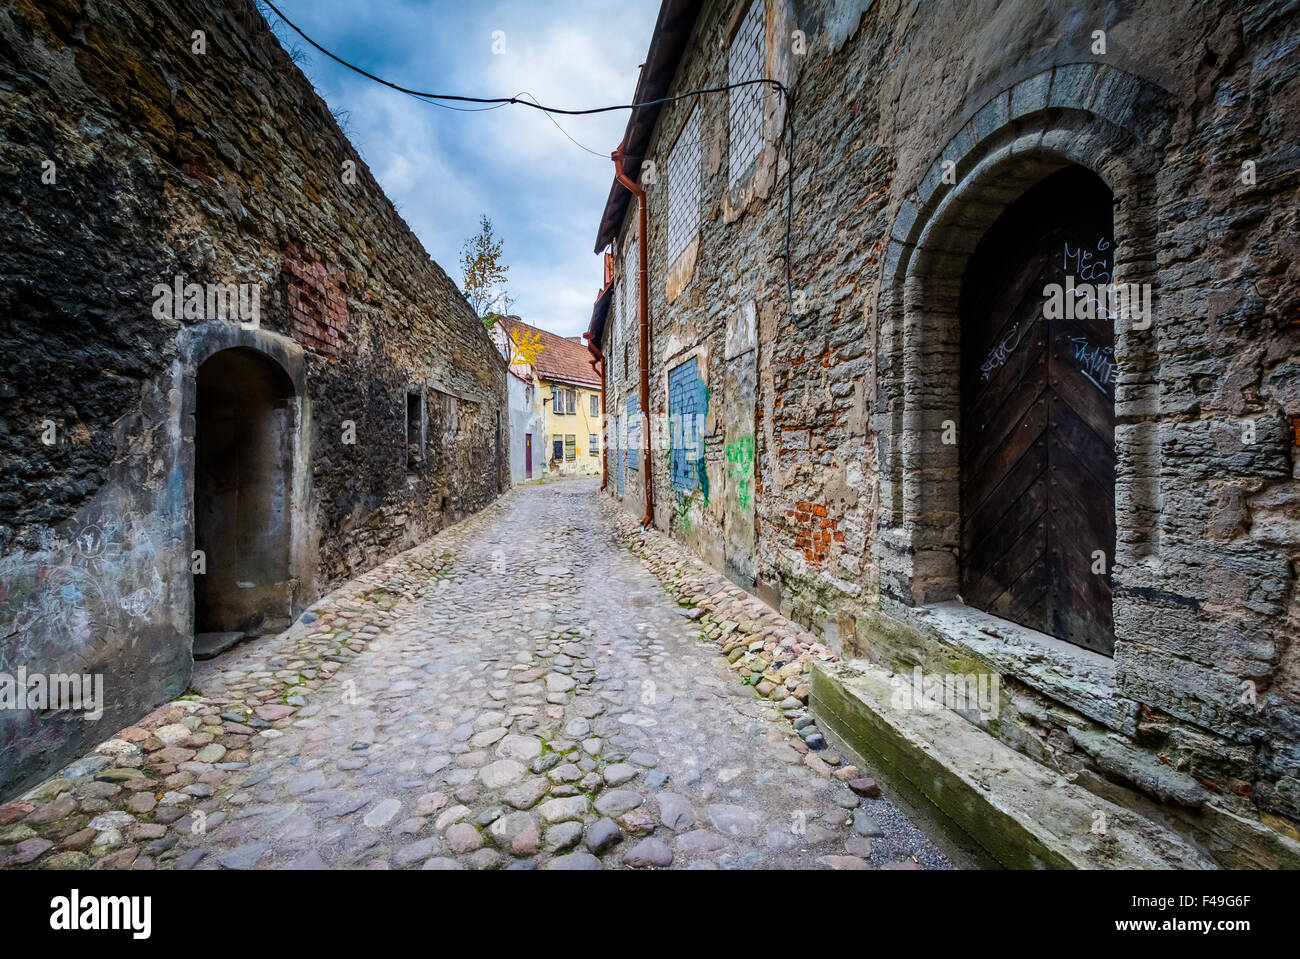 Aida, a narrow cobblestone street in the Old Town, Tallinn, Estonia. Stock Photo